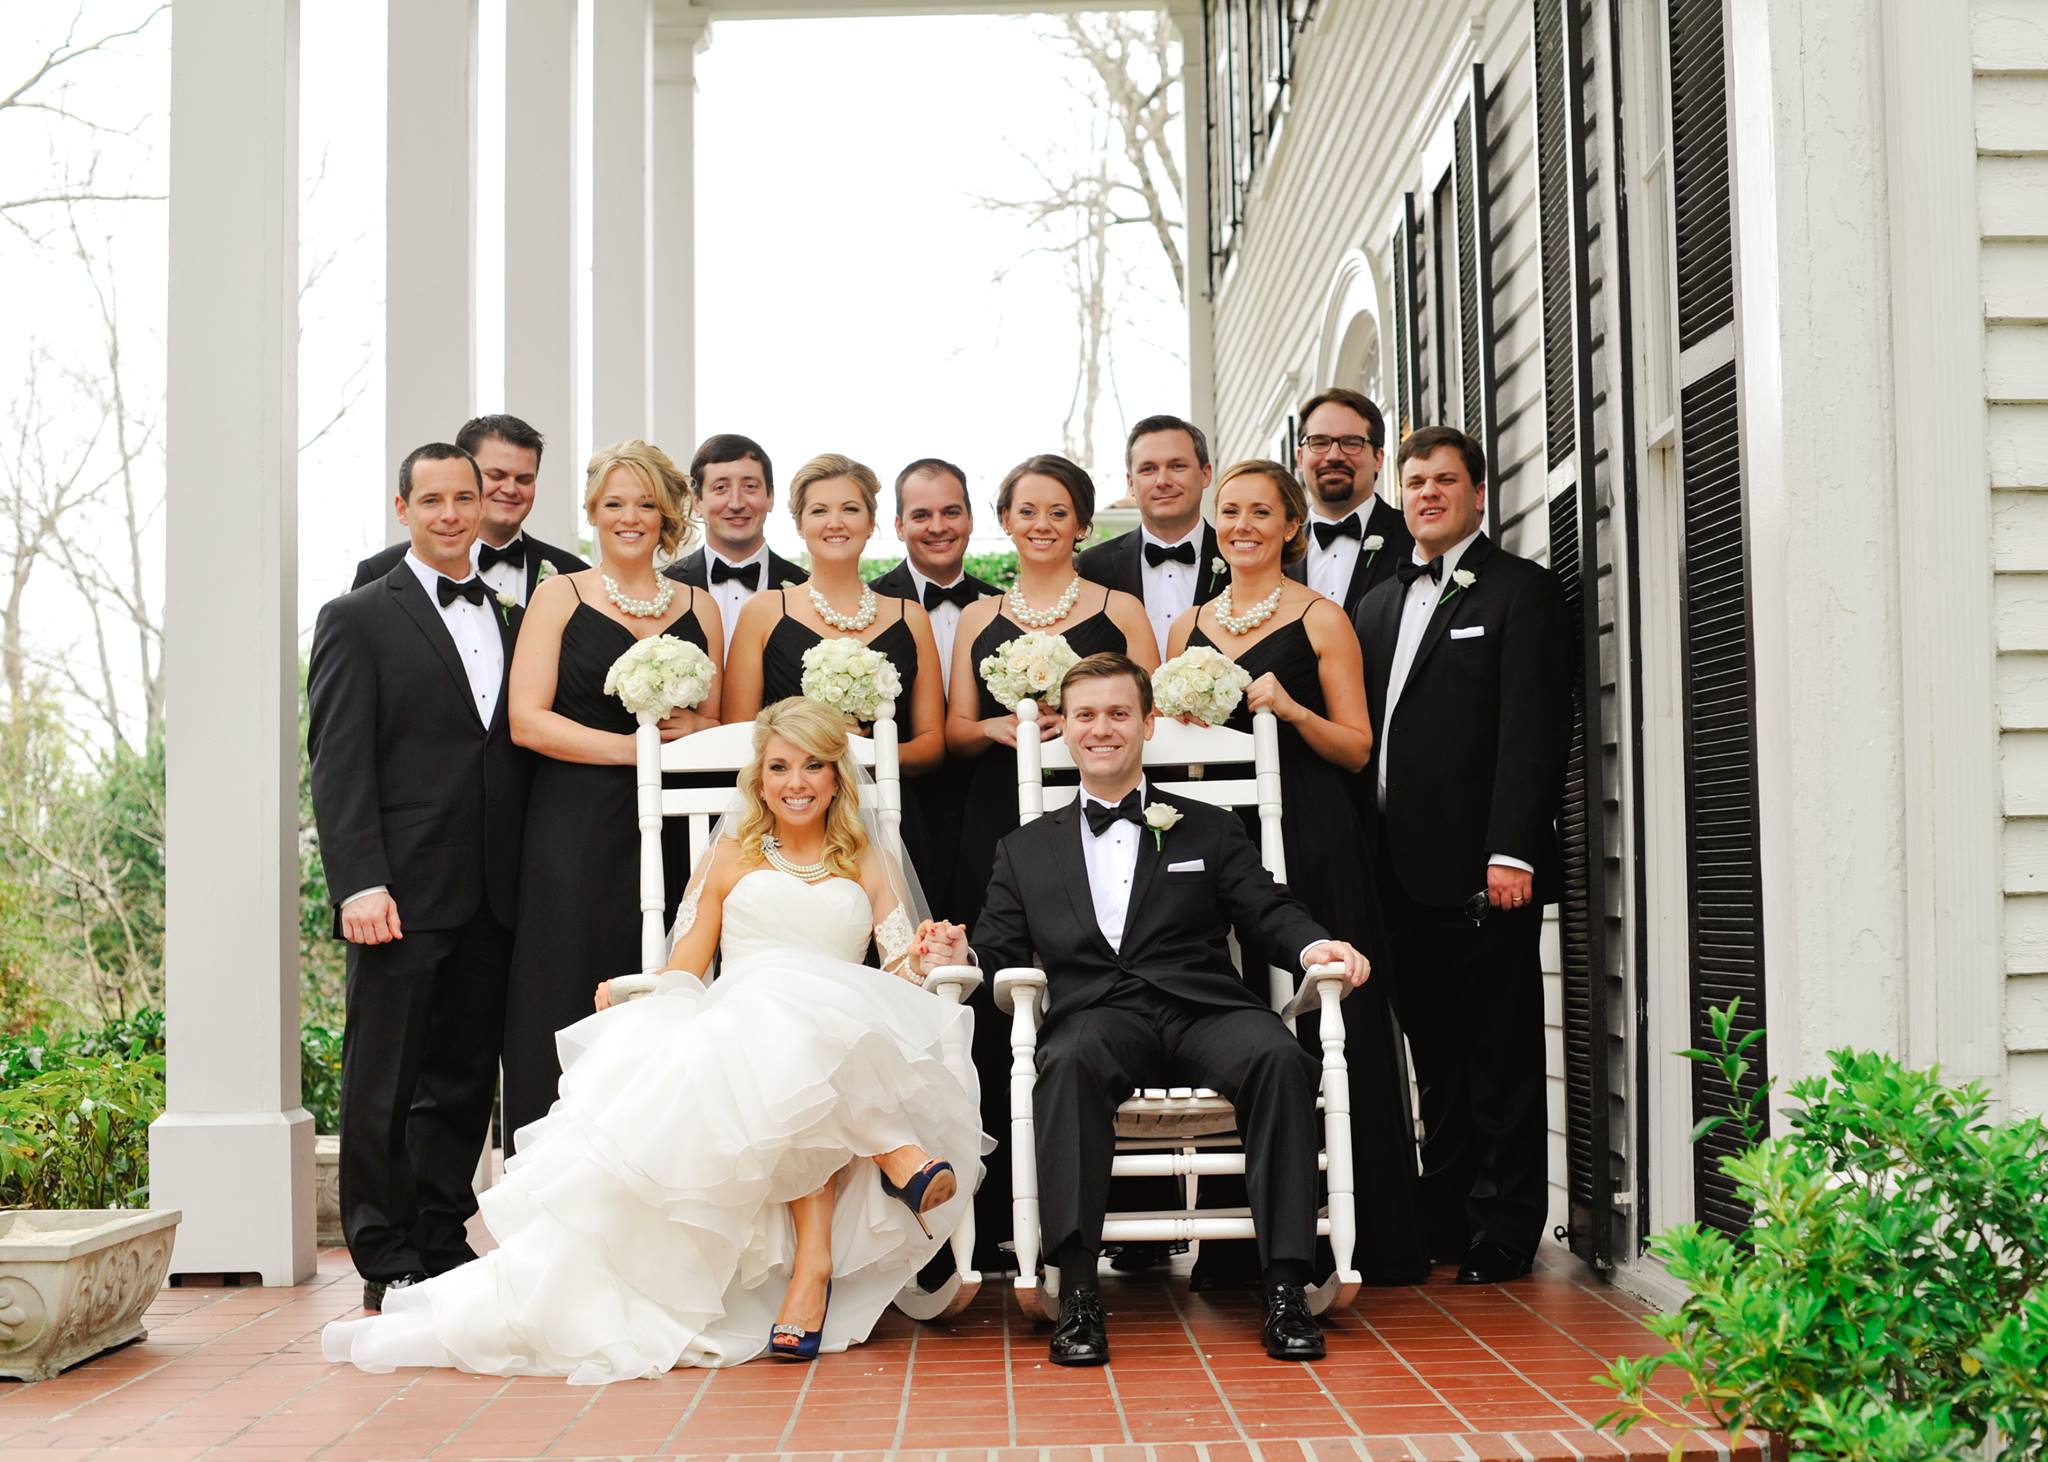 An Intimate Wedding Party with Savannah Wedding Photographer Callie Beale 